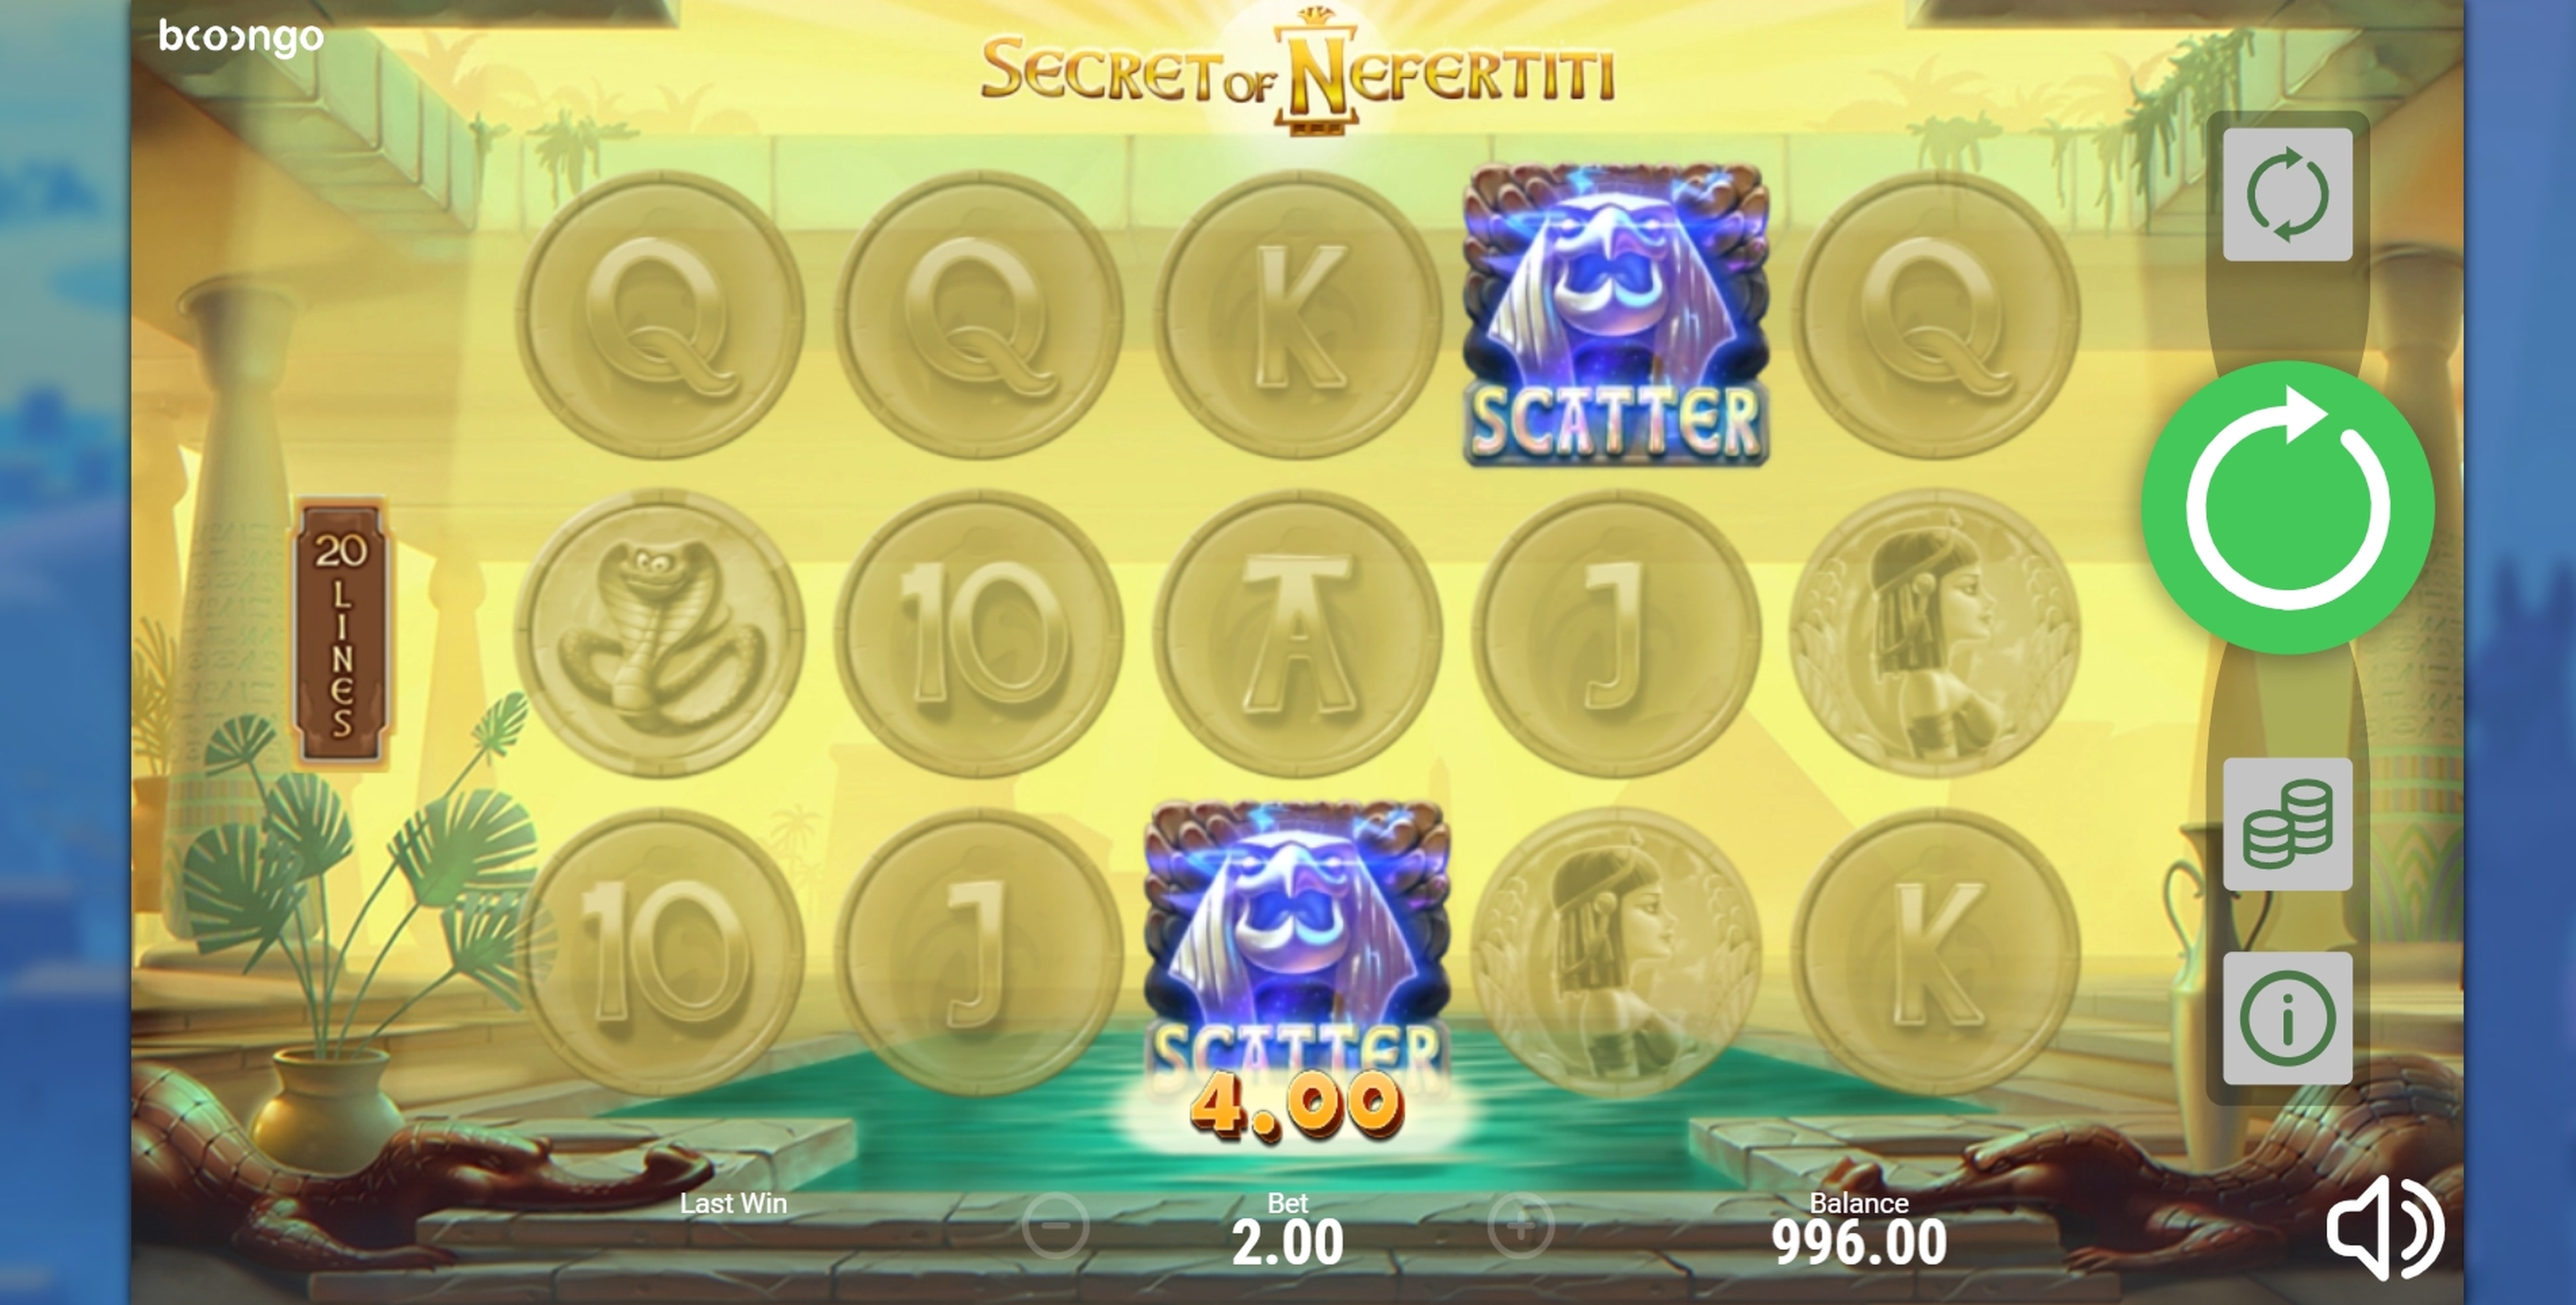 Win Money in Secret Of Nefertiti Free Slot Game by Booongo Gaming